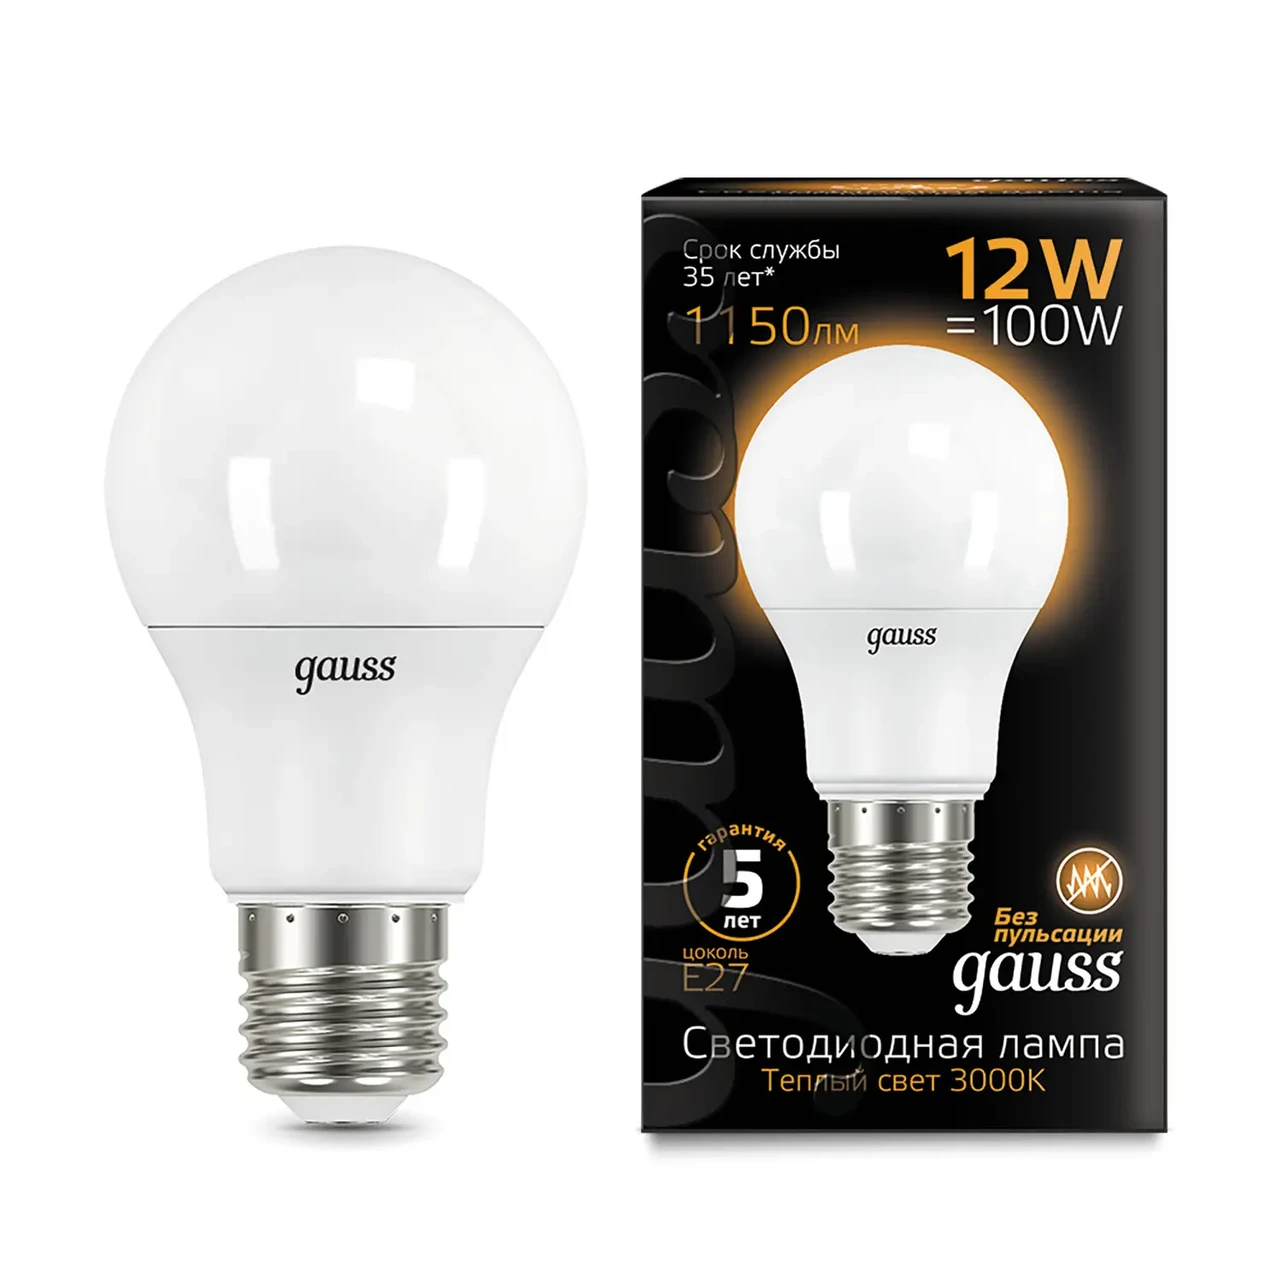 Лампа Gauss A60 12W 1150lm 3000K E27 LED 1/10/50, фото 1